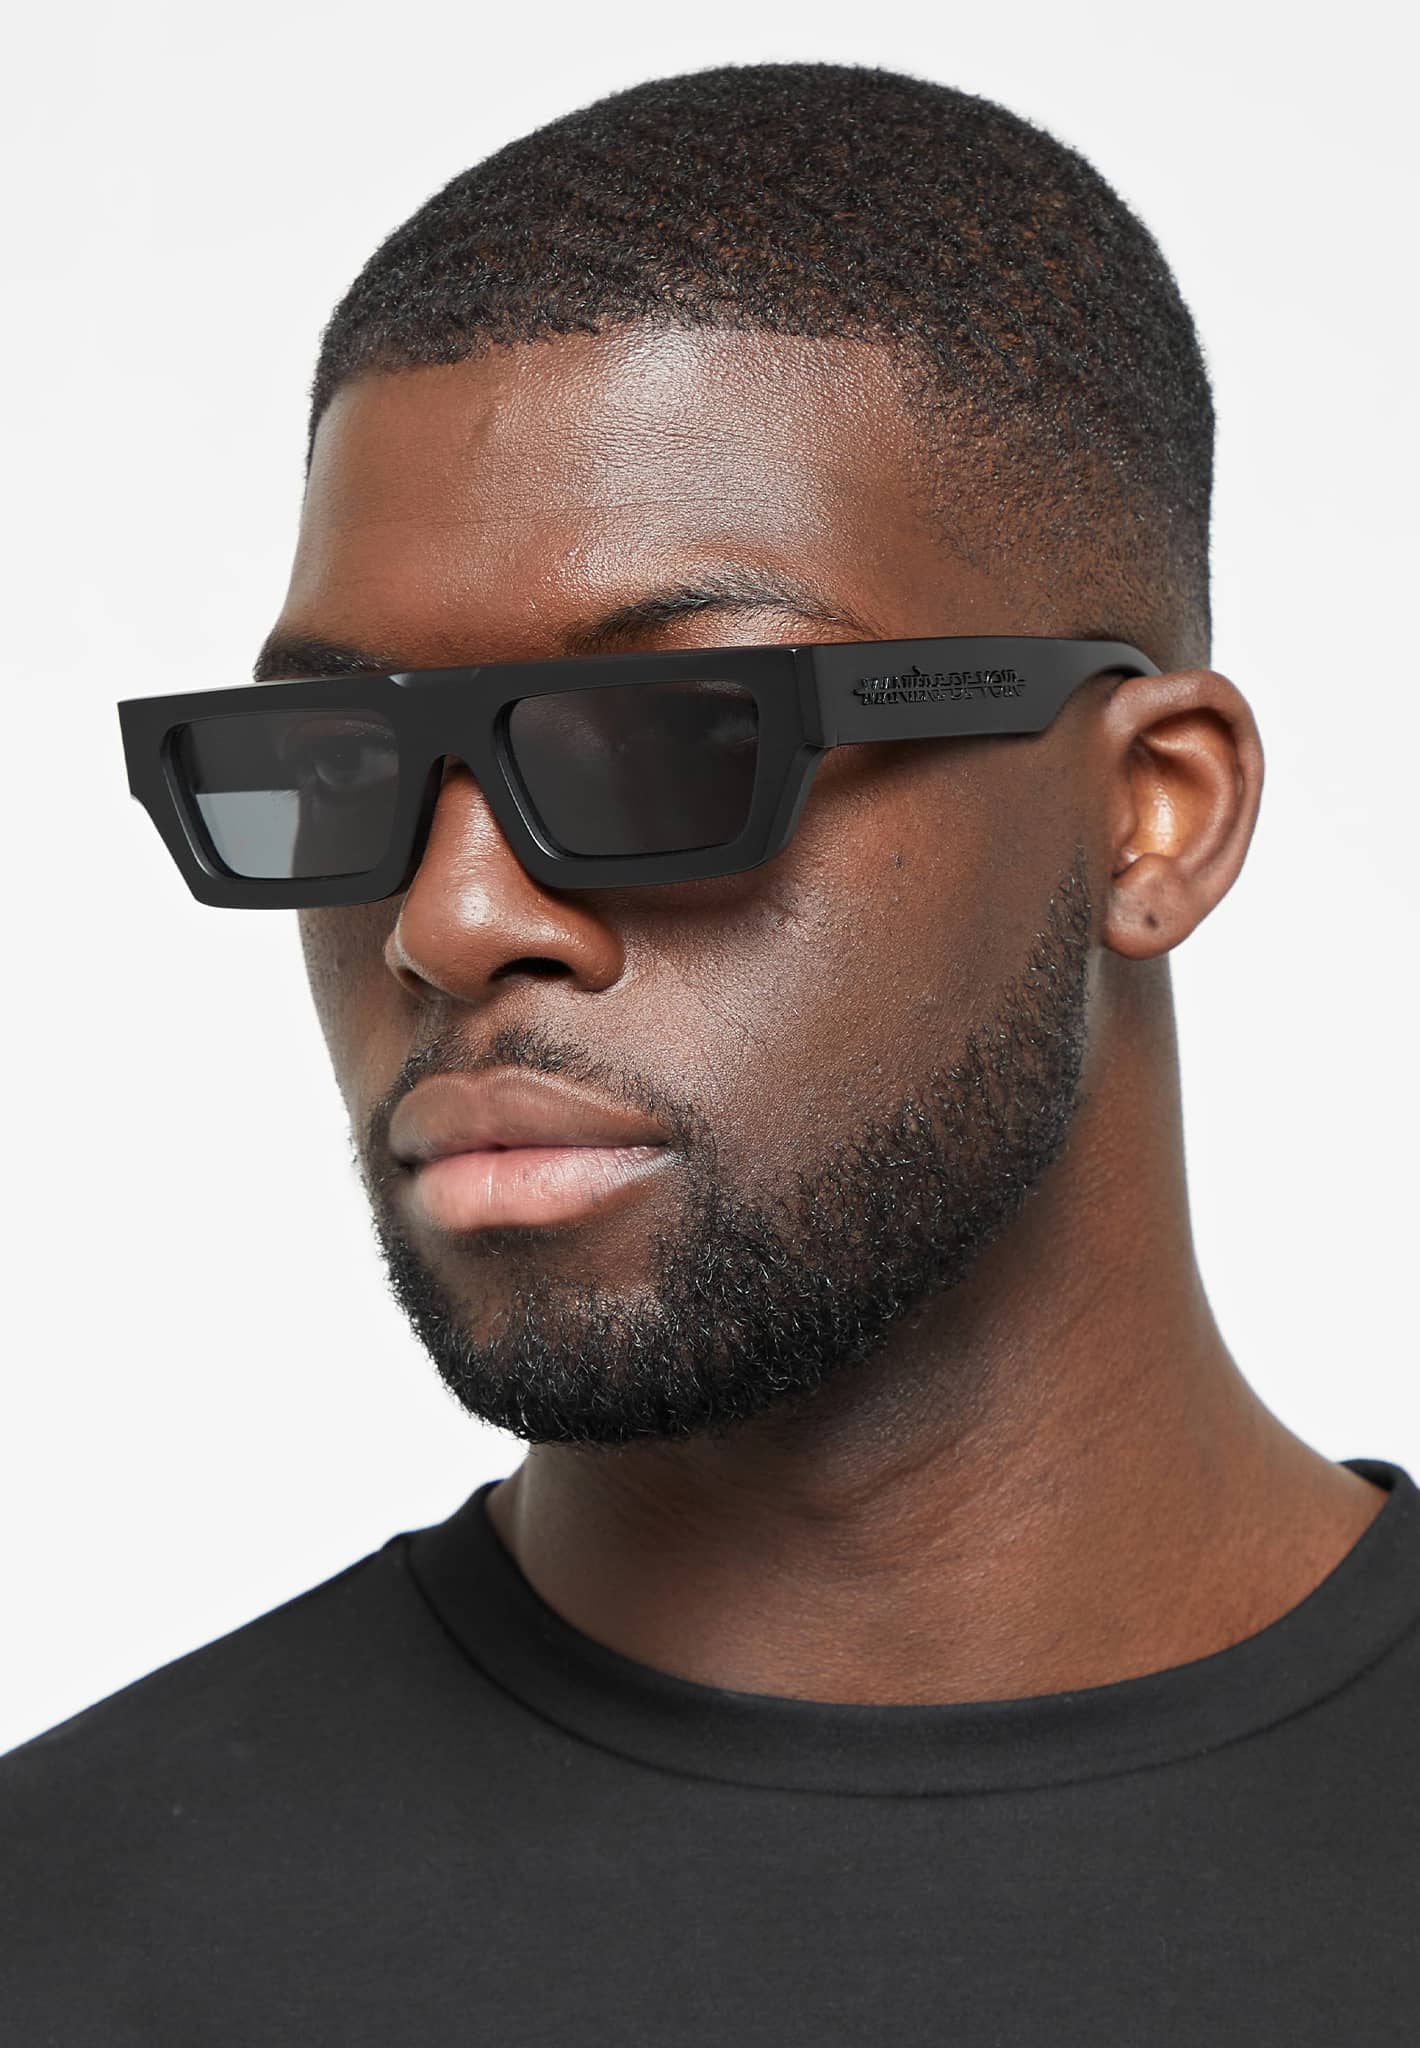 azur-sunglasses-matte-black